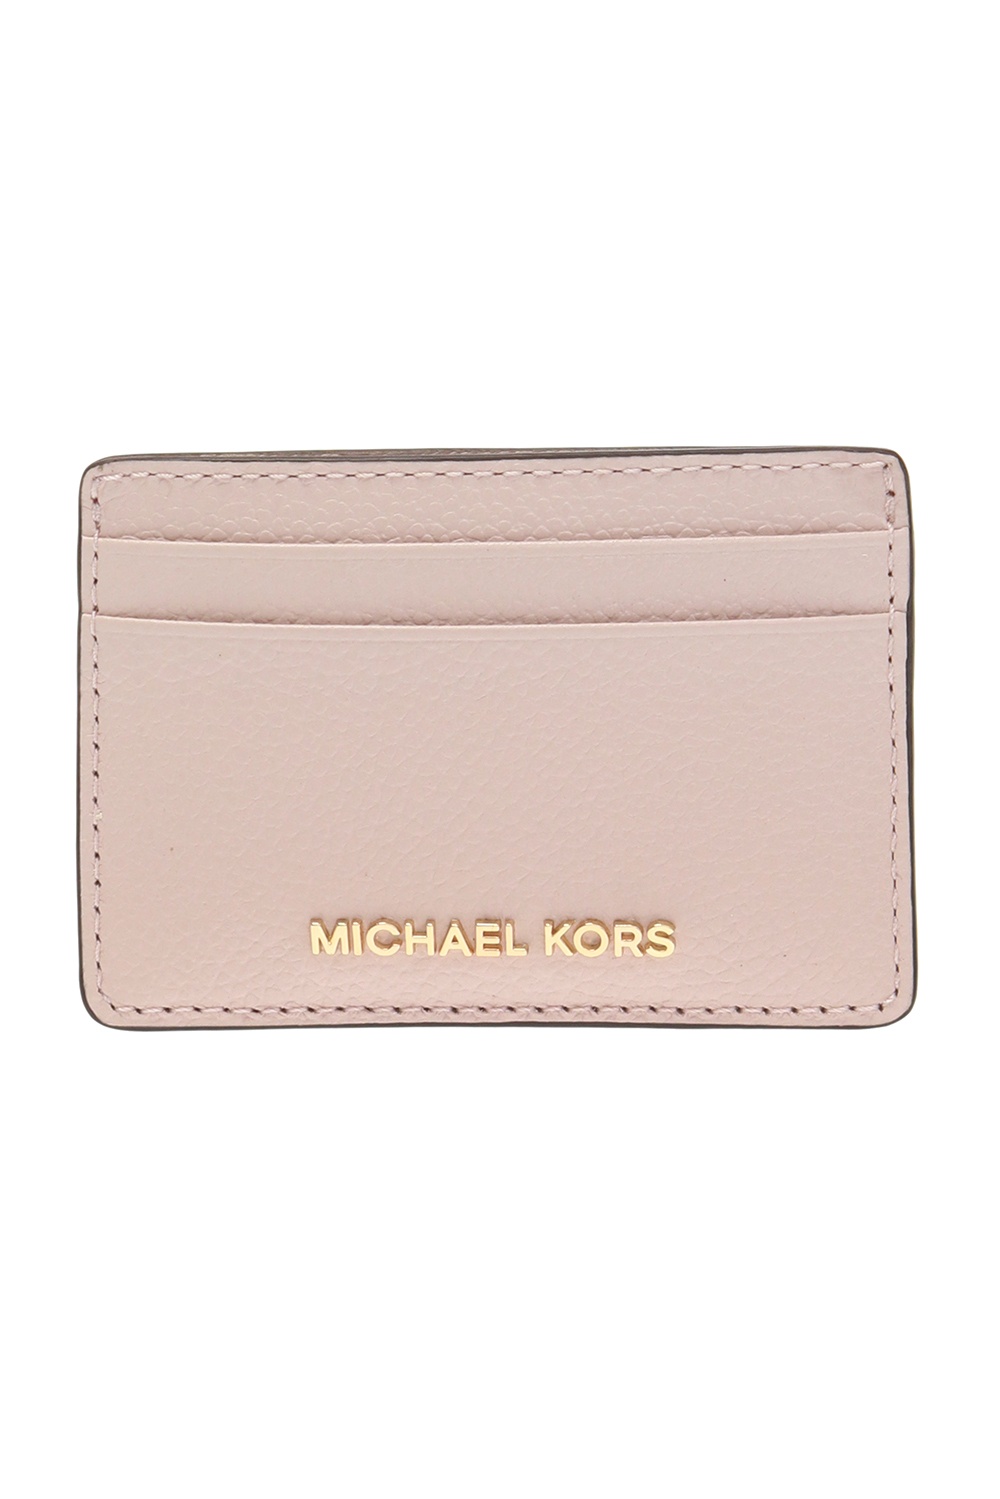 michael kors card holder pink